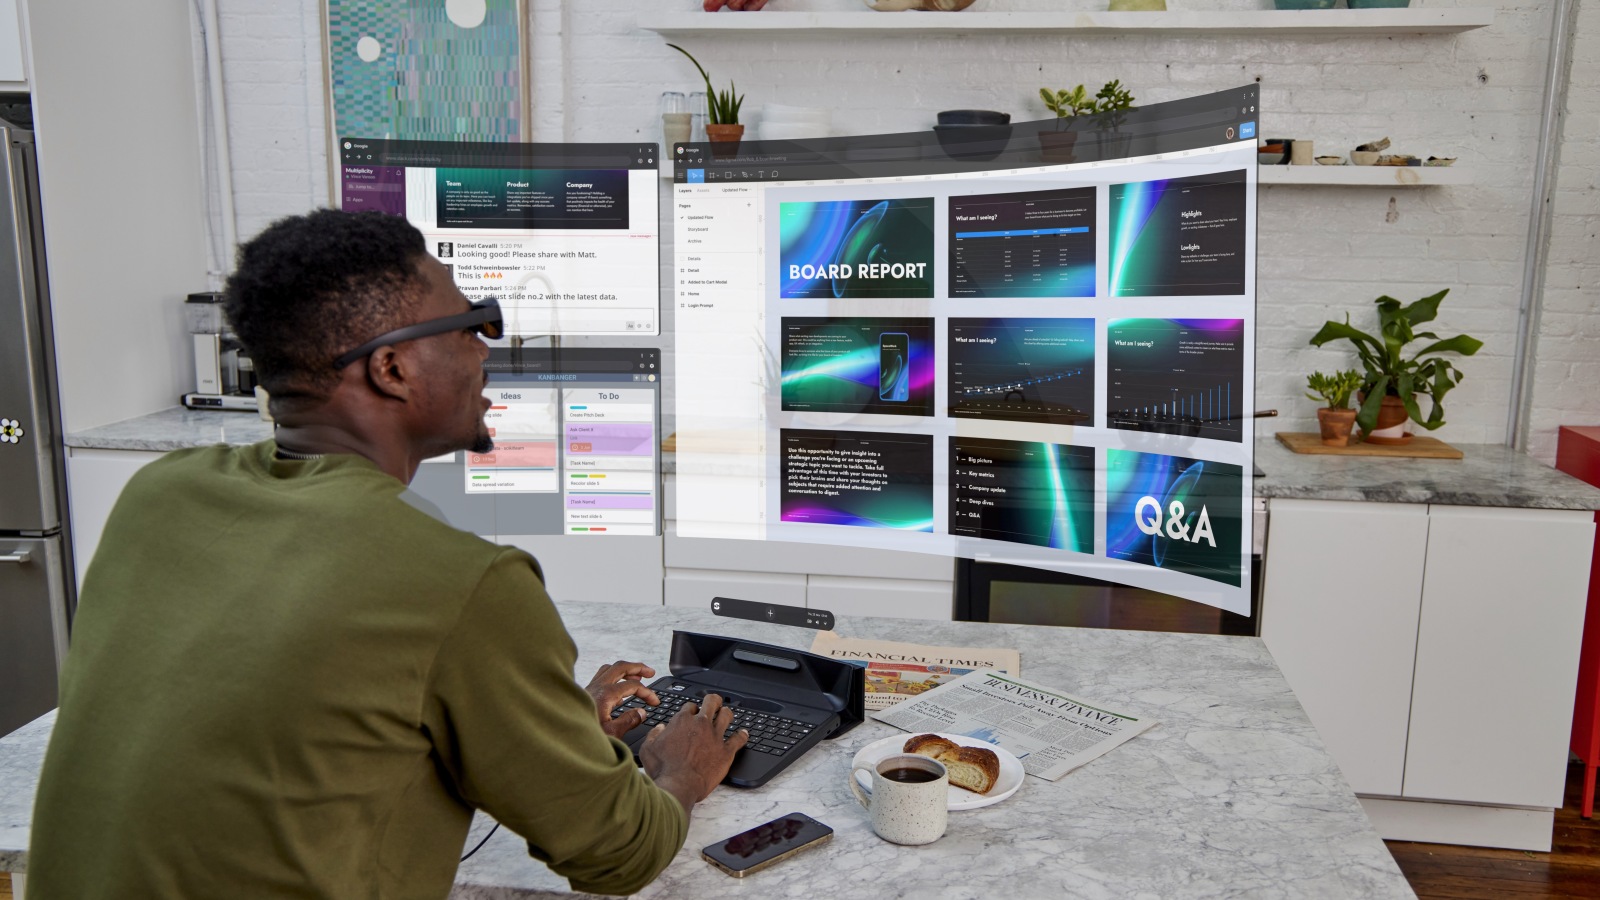 Spacetop: startup de Israel lança laptop com tela em realidade virtual 